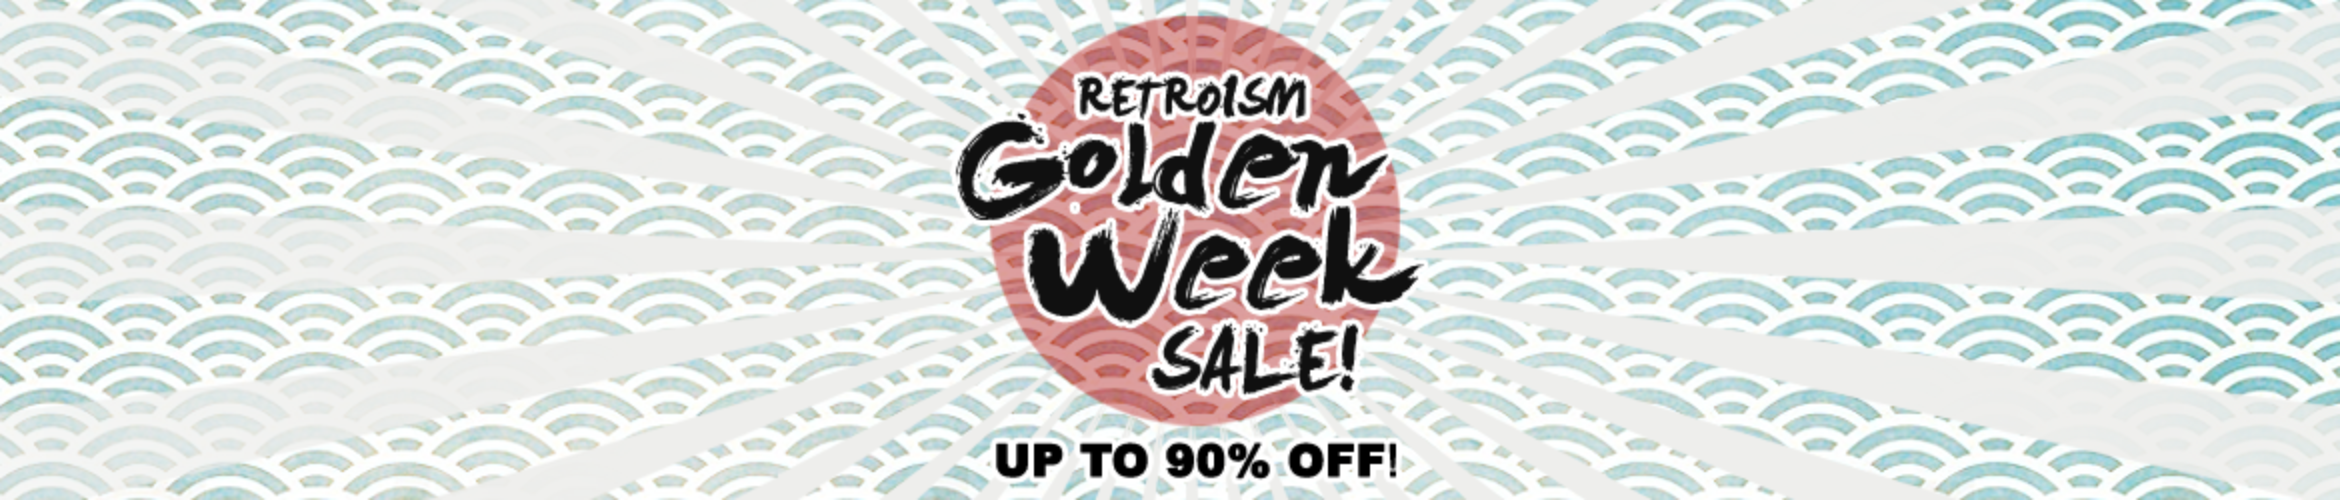 Golden-Week-Sale-Retroism-Home-Banner-2340x500.png